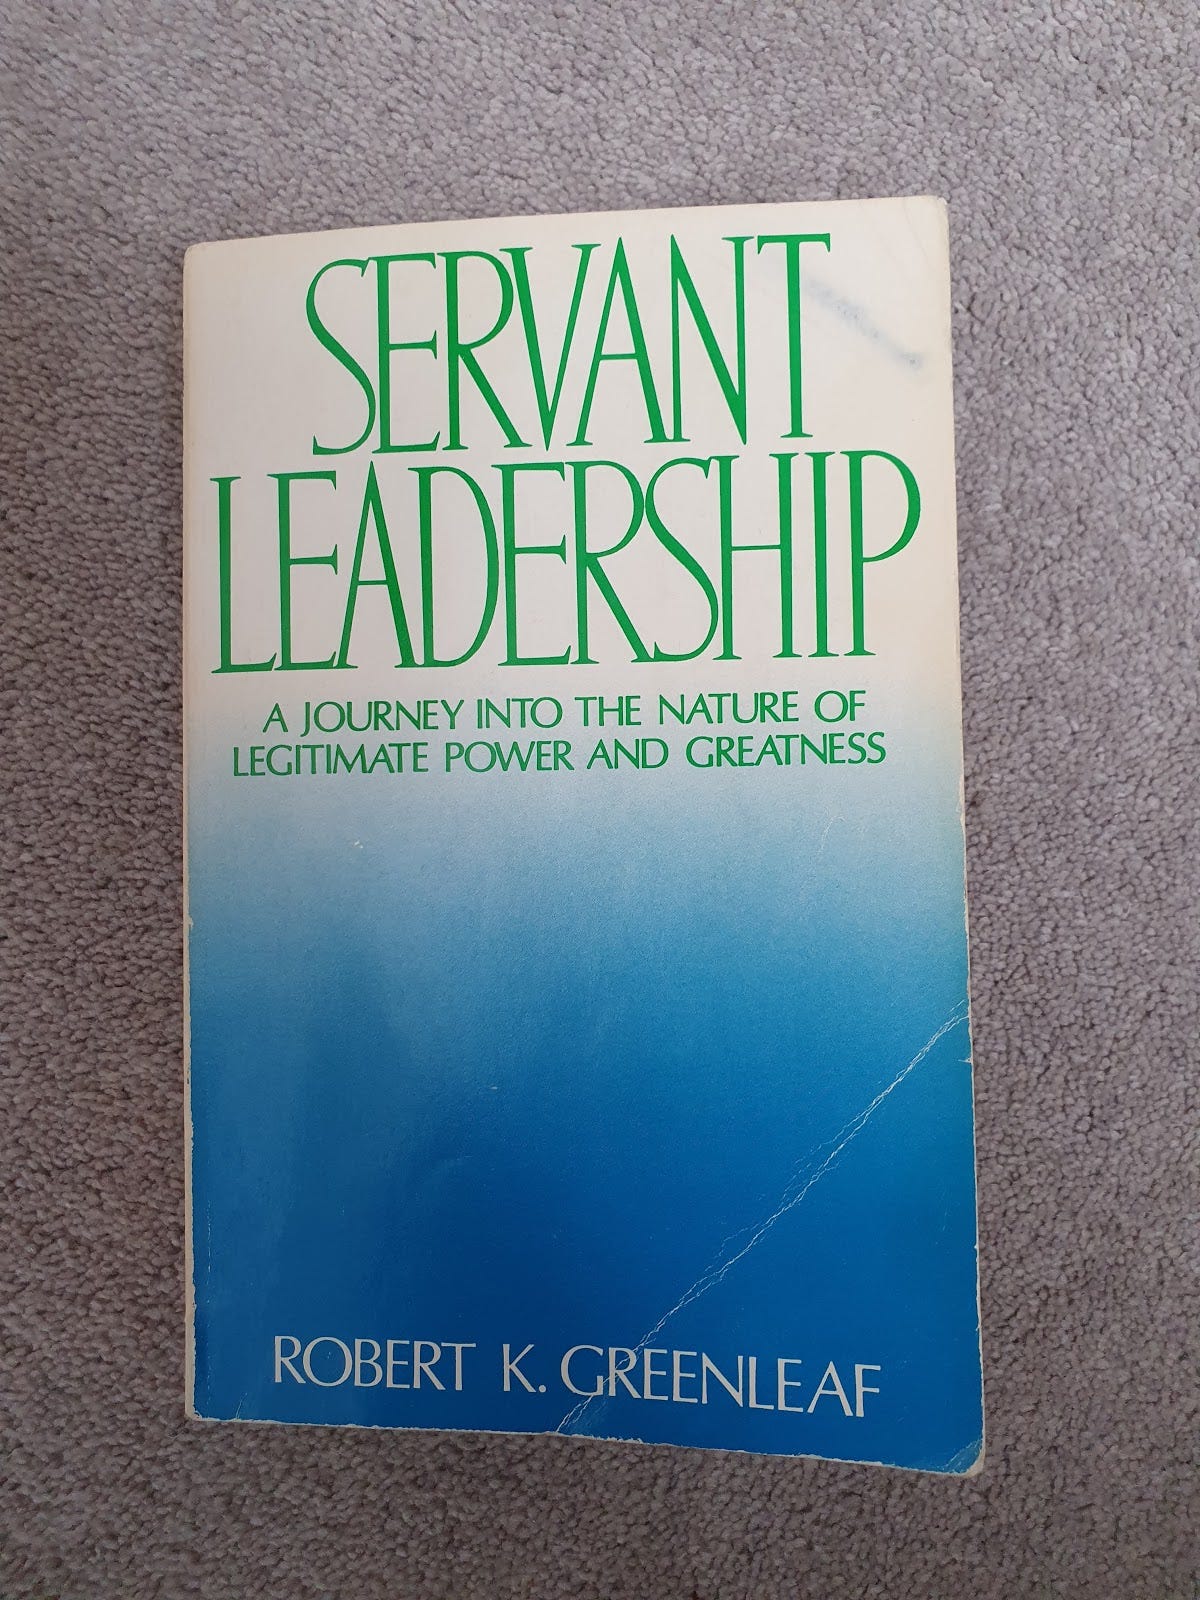 Servant Leadership — book summary | by Joel Bailey | Society of Service |  Medium